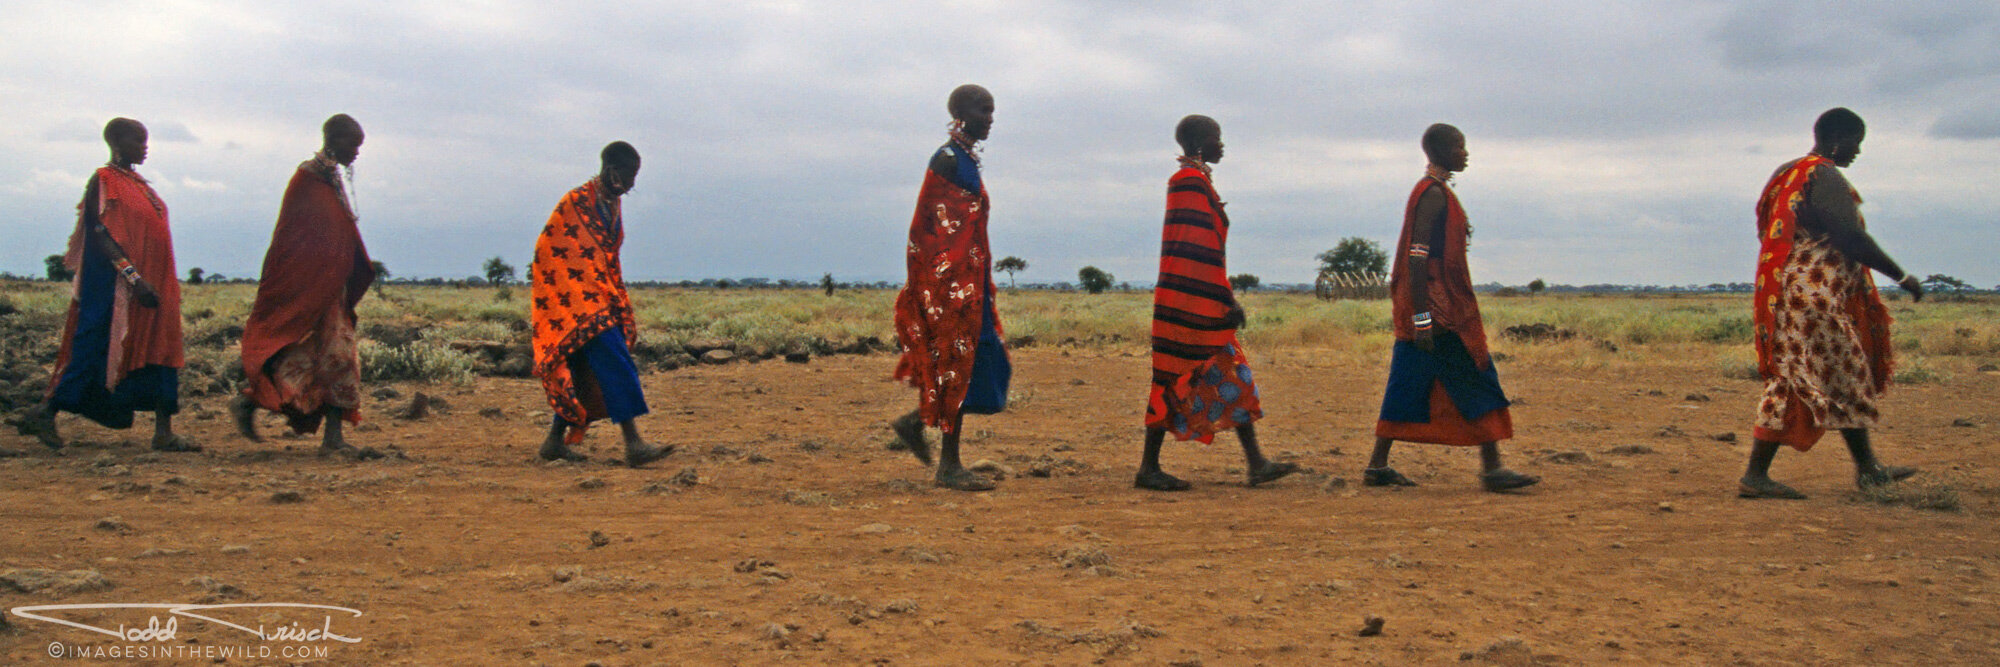 Silhouetted Maasai